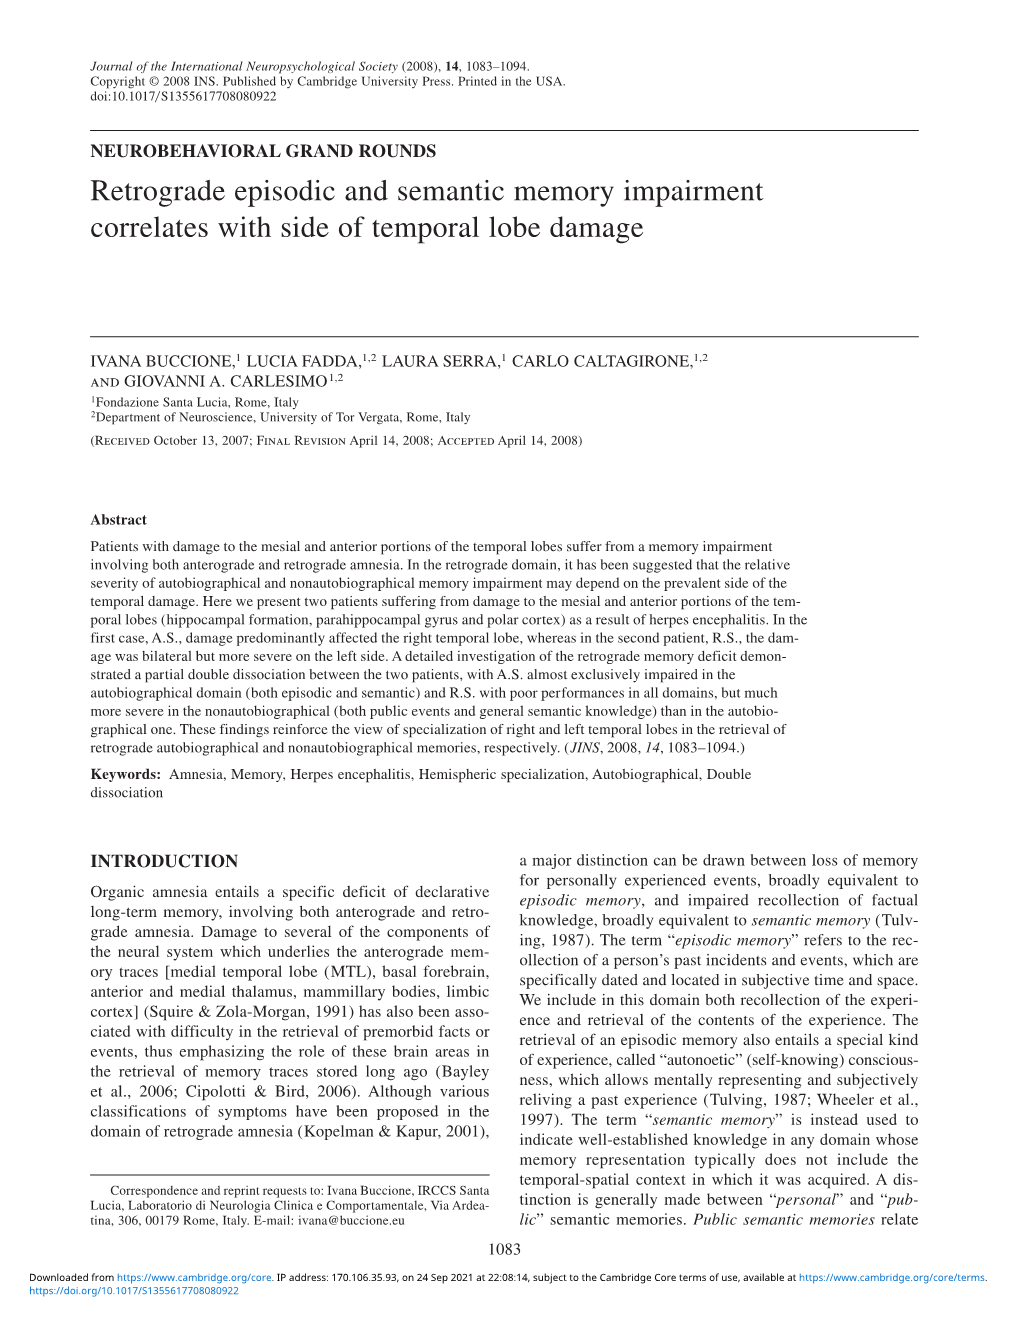 Retrograde Episodic and Semantic Memory Impairment Correlates with Side of Temporal Lobe Damage